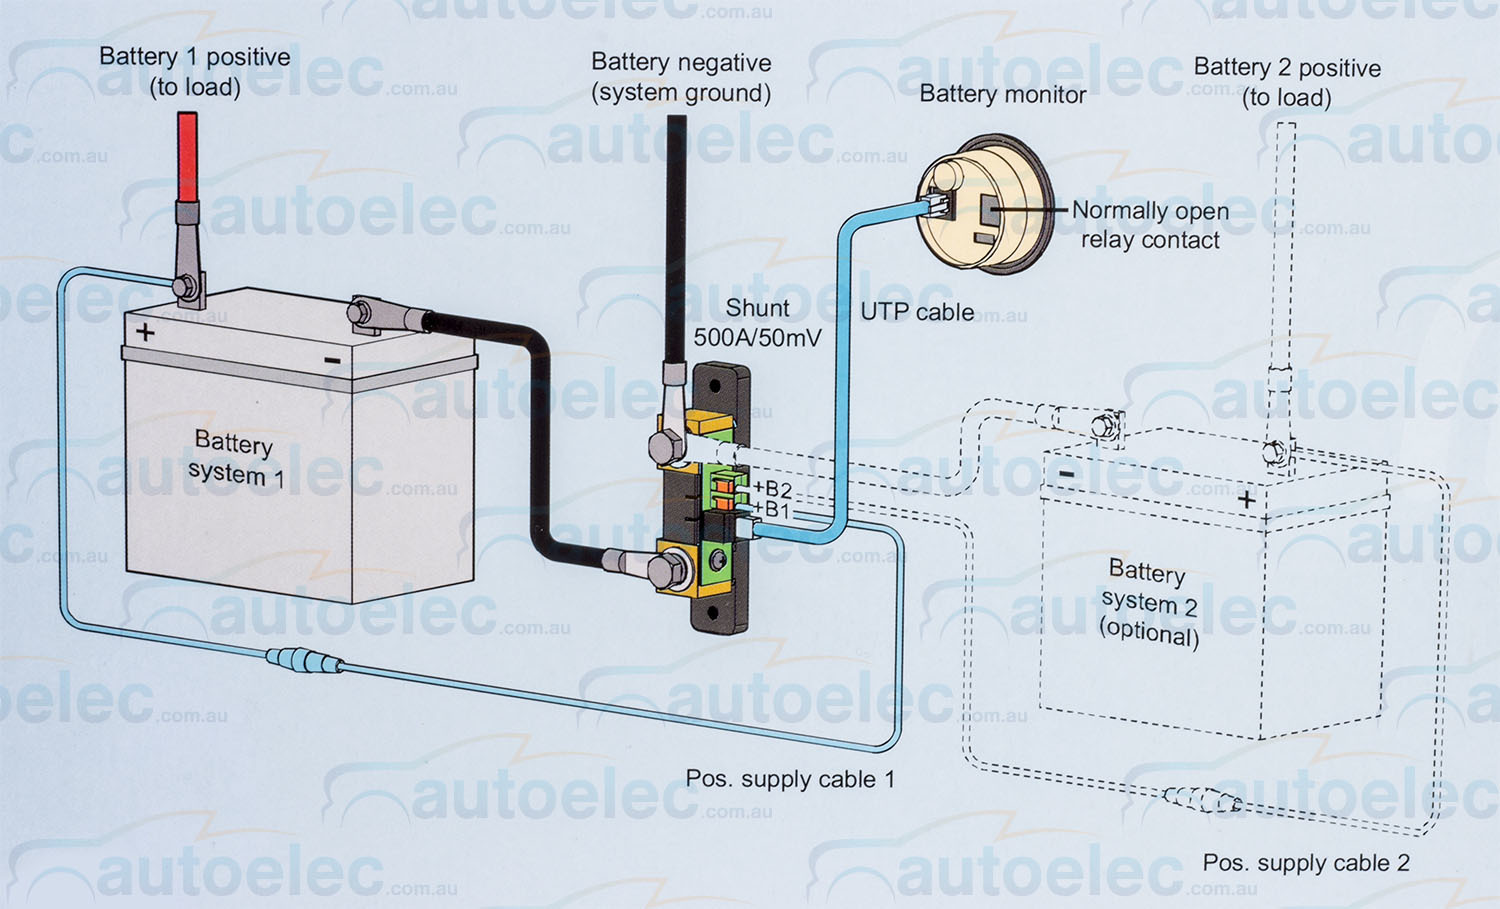 Ignition Interlock Wiring Diagram from www.autoelec.com.au